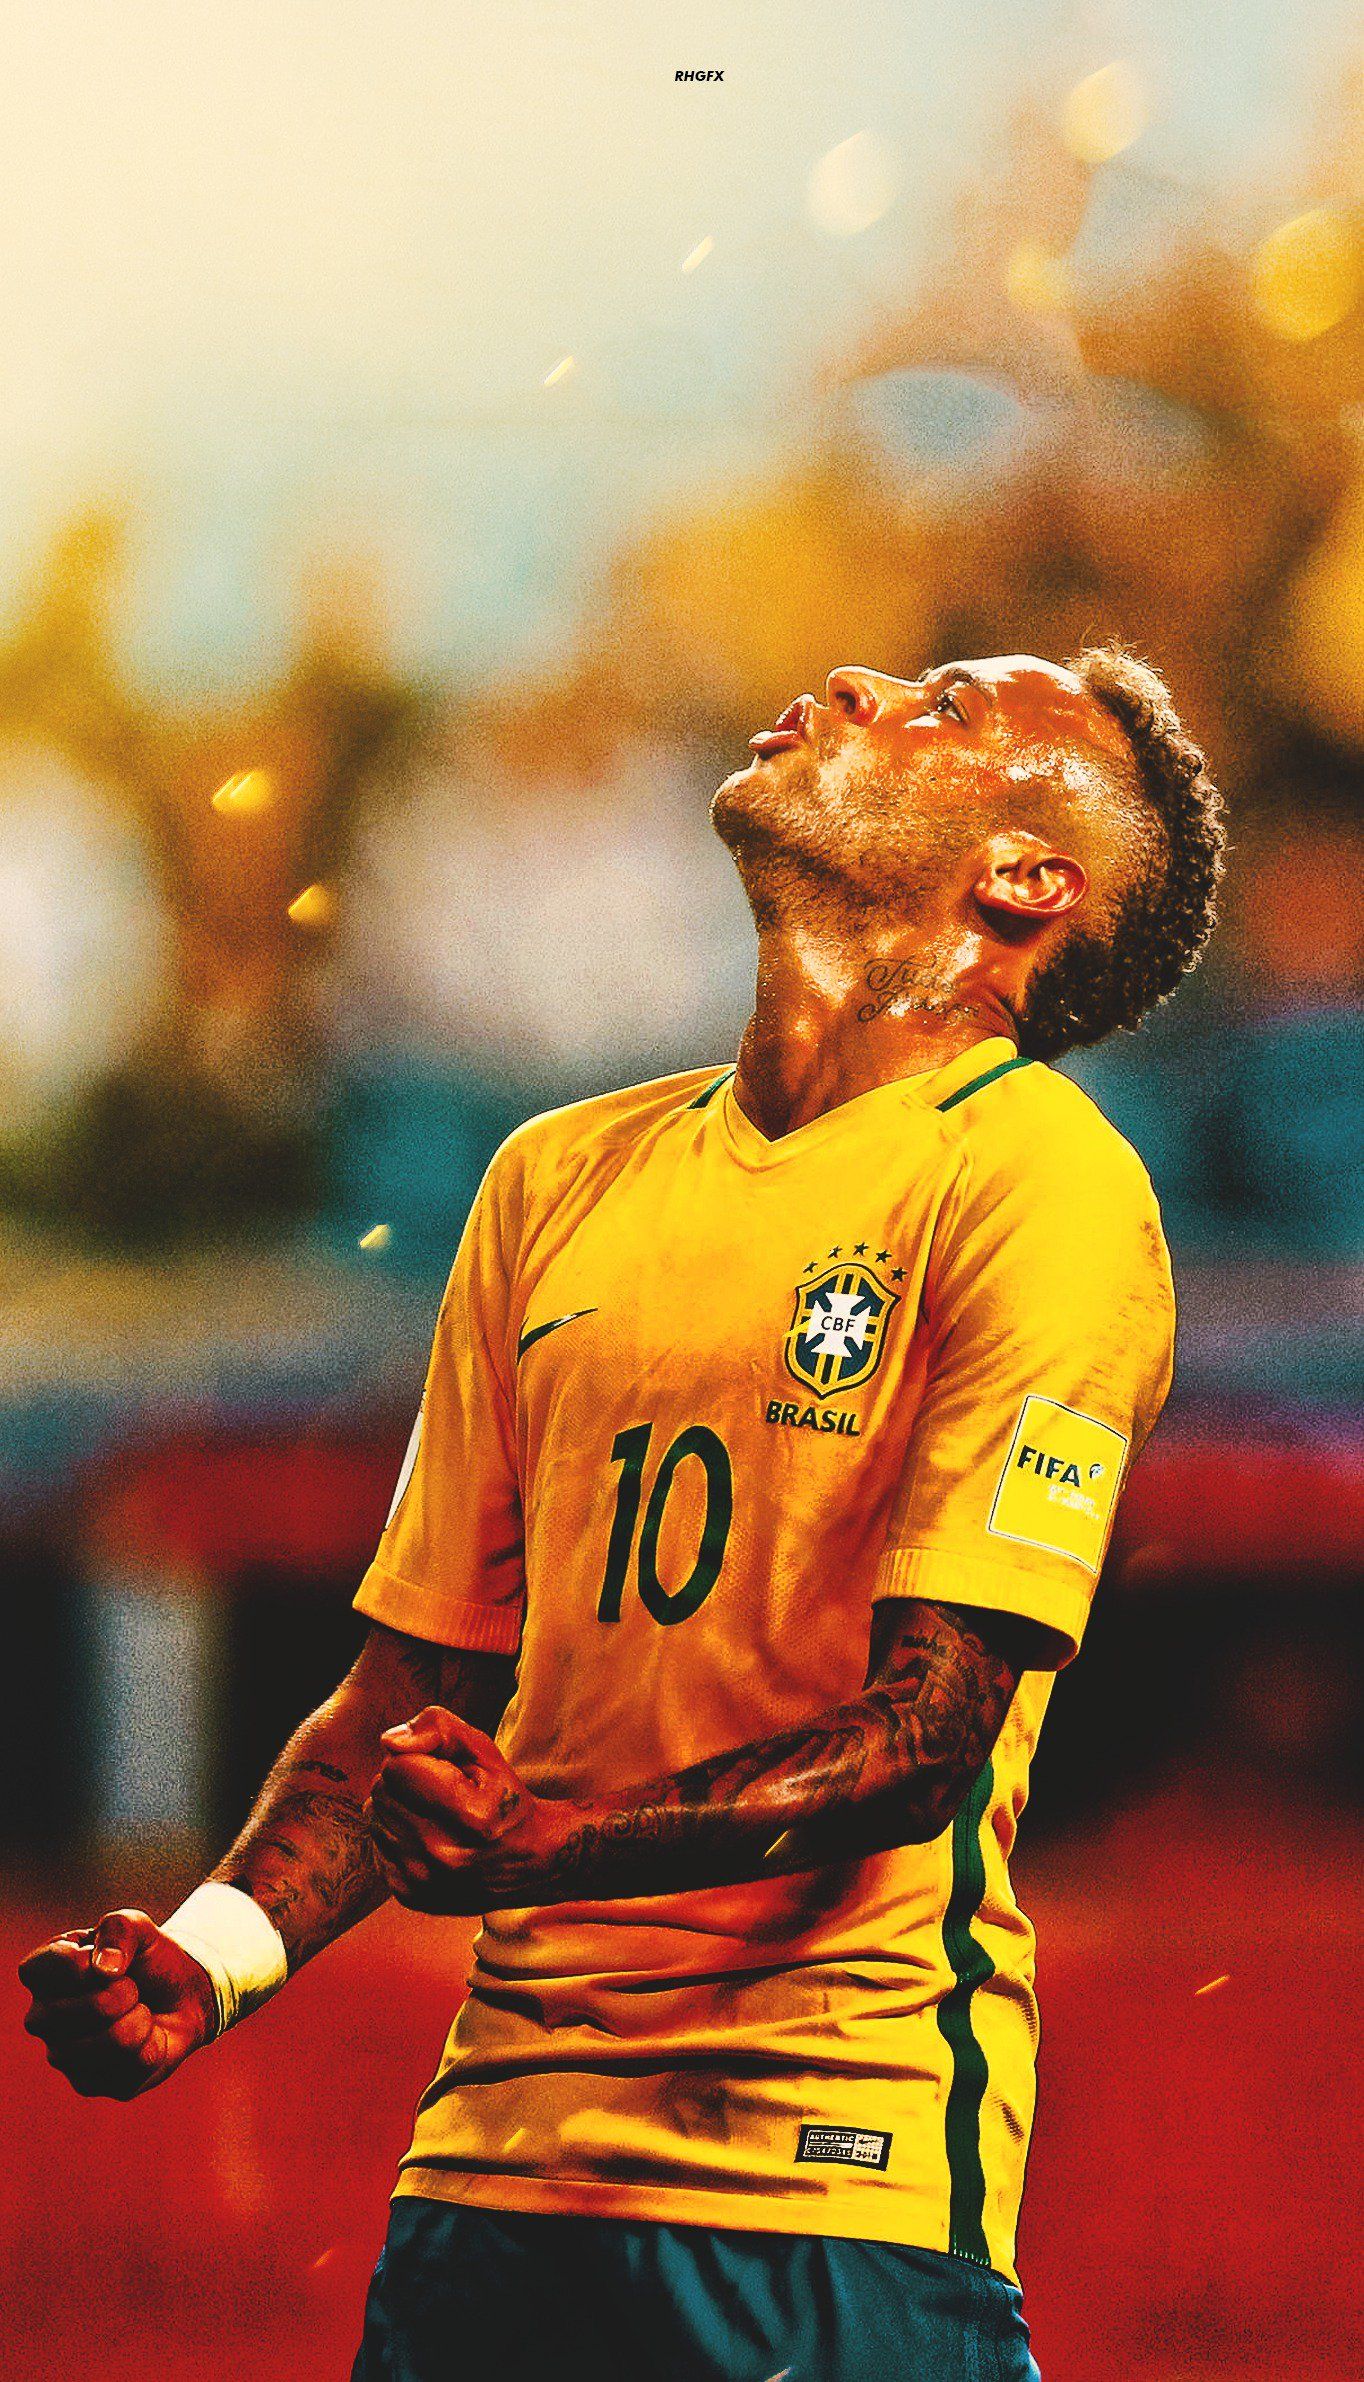 Wallpaper. #neymar #brazil